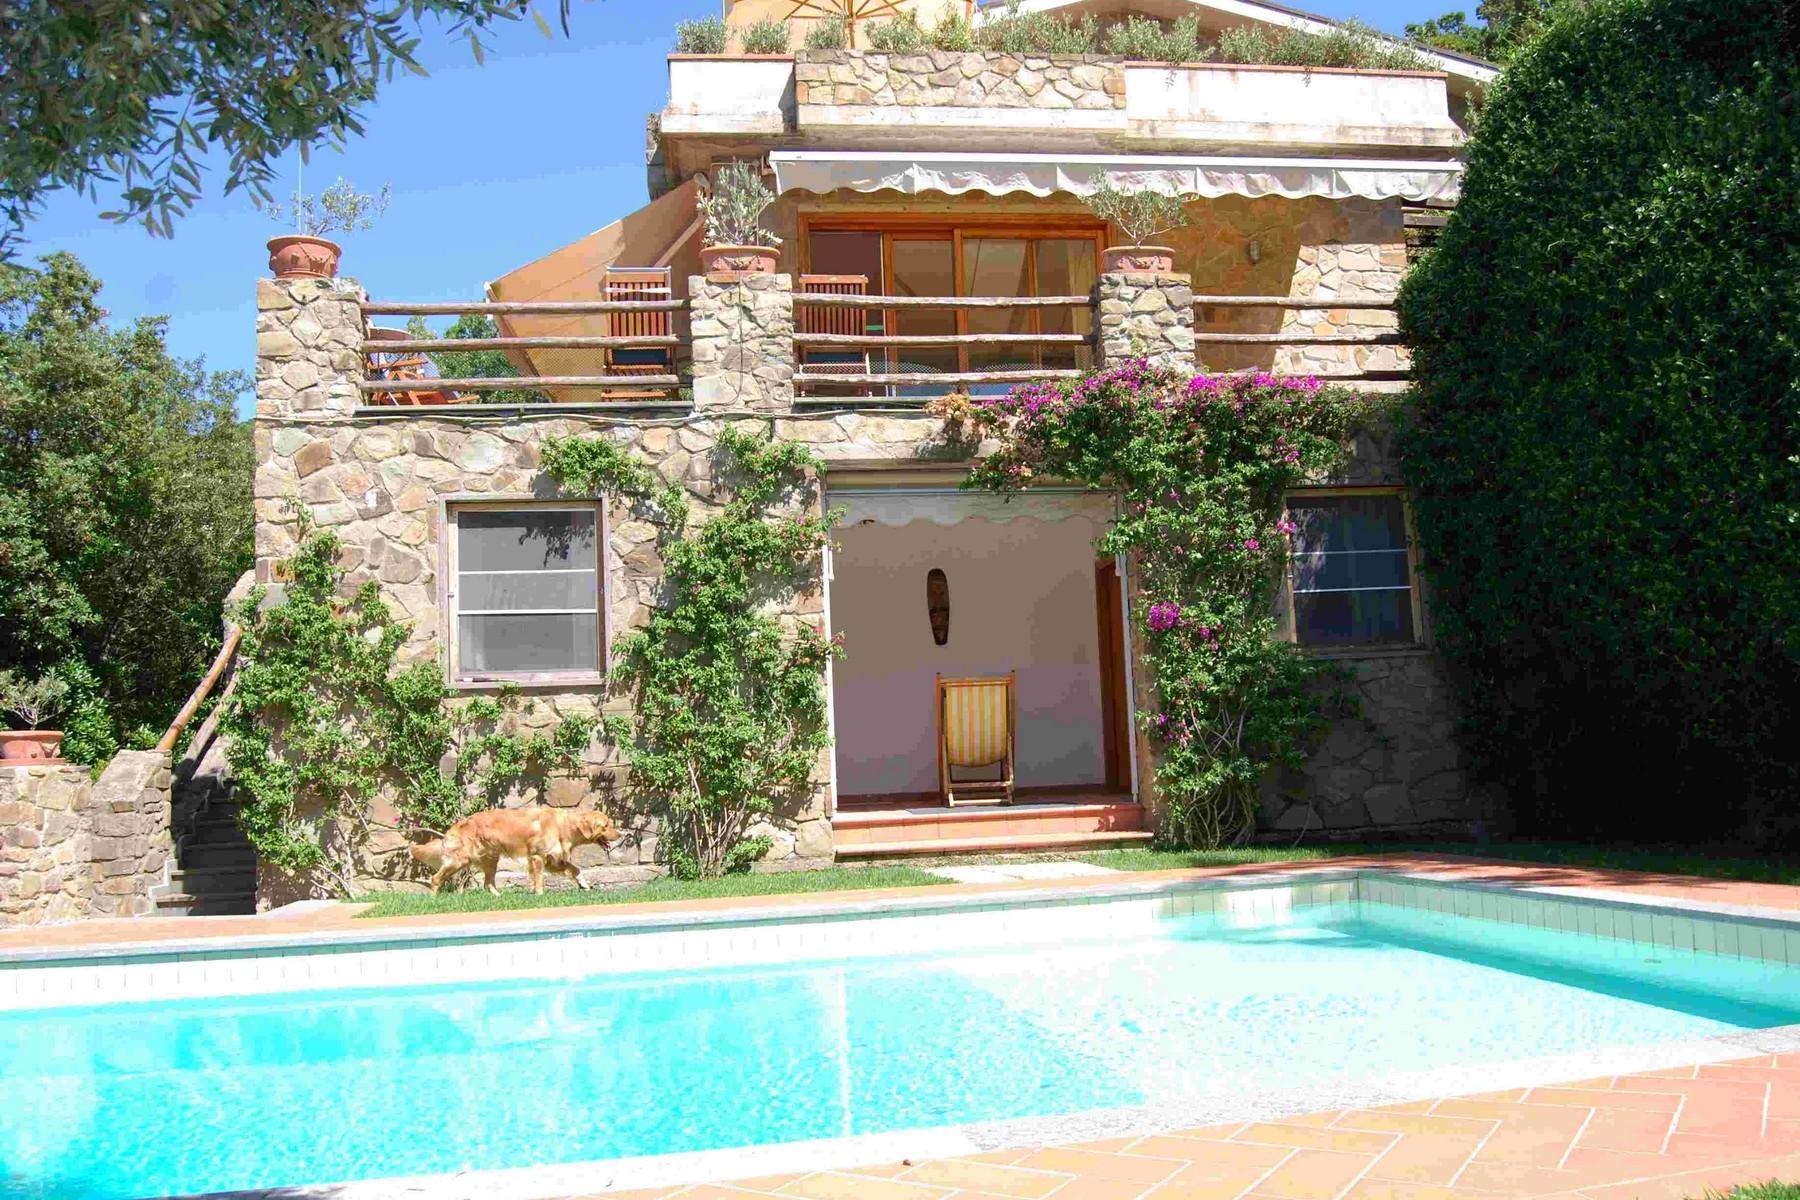 Modern villa with swimming pool and Mediterranean garden - 7